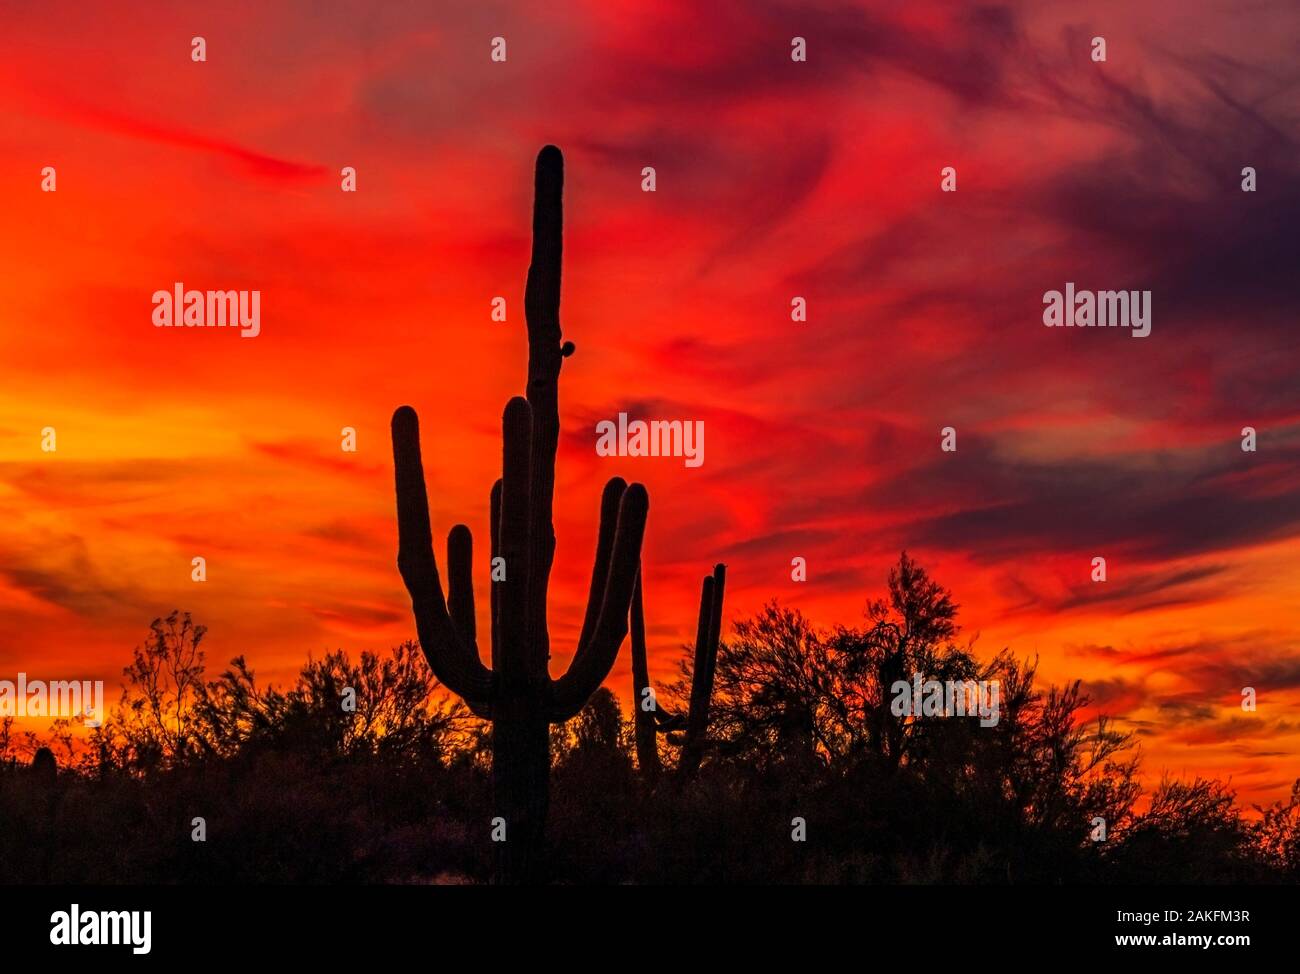 Vibrant Blood Red Arizona Desert Sunrise Landscape With Saguaro Cactus Silhouette Stock Photo